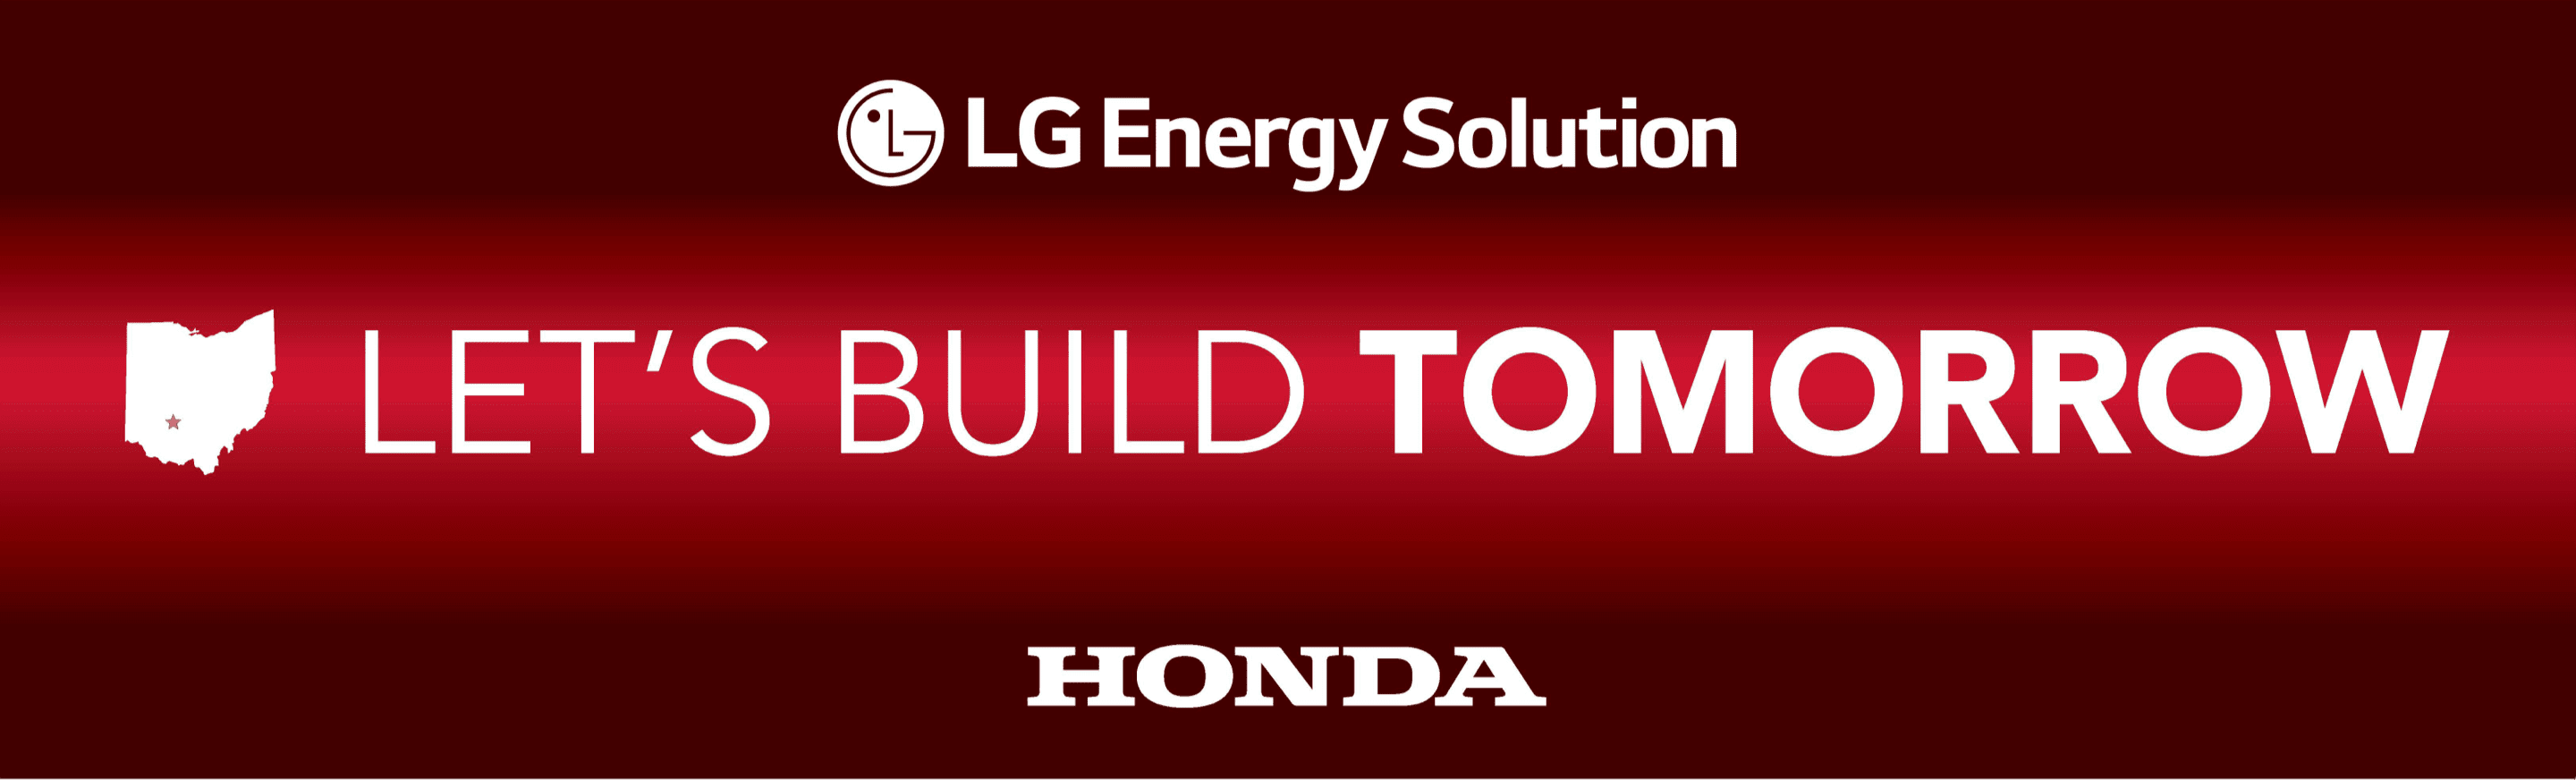 LG Energy Solution | Honda - Let's Build Tomorrow